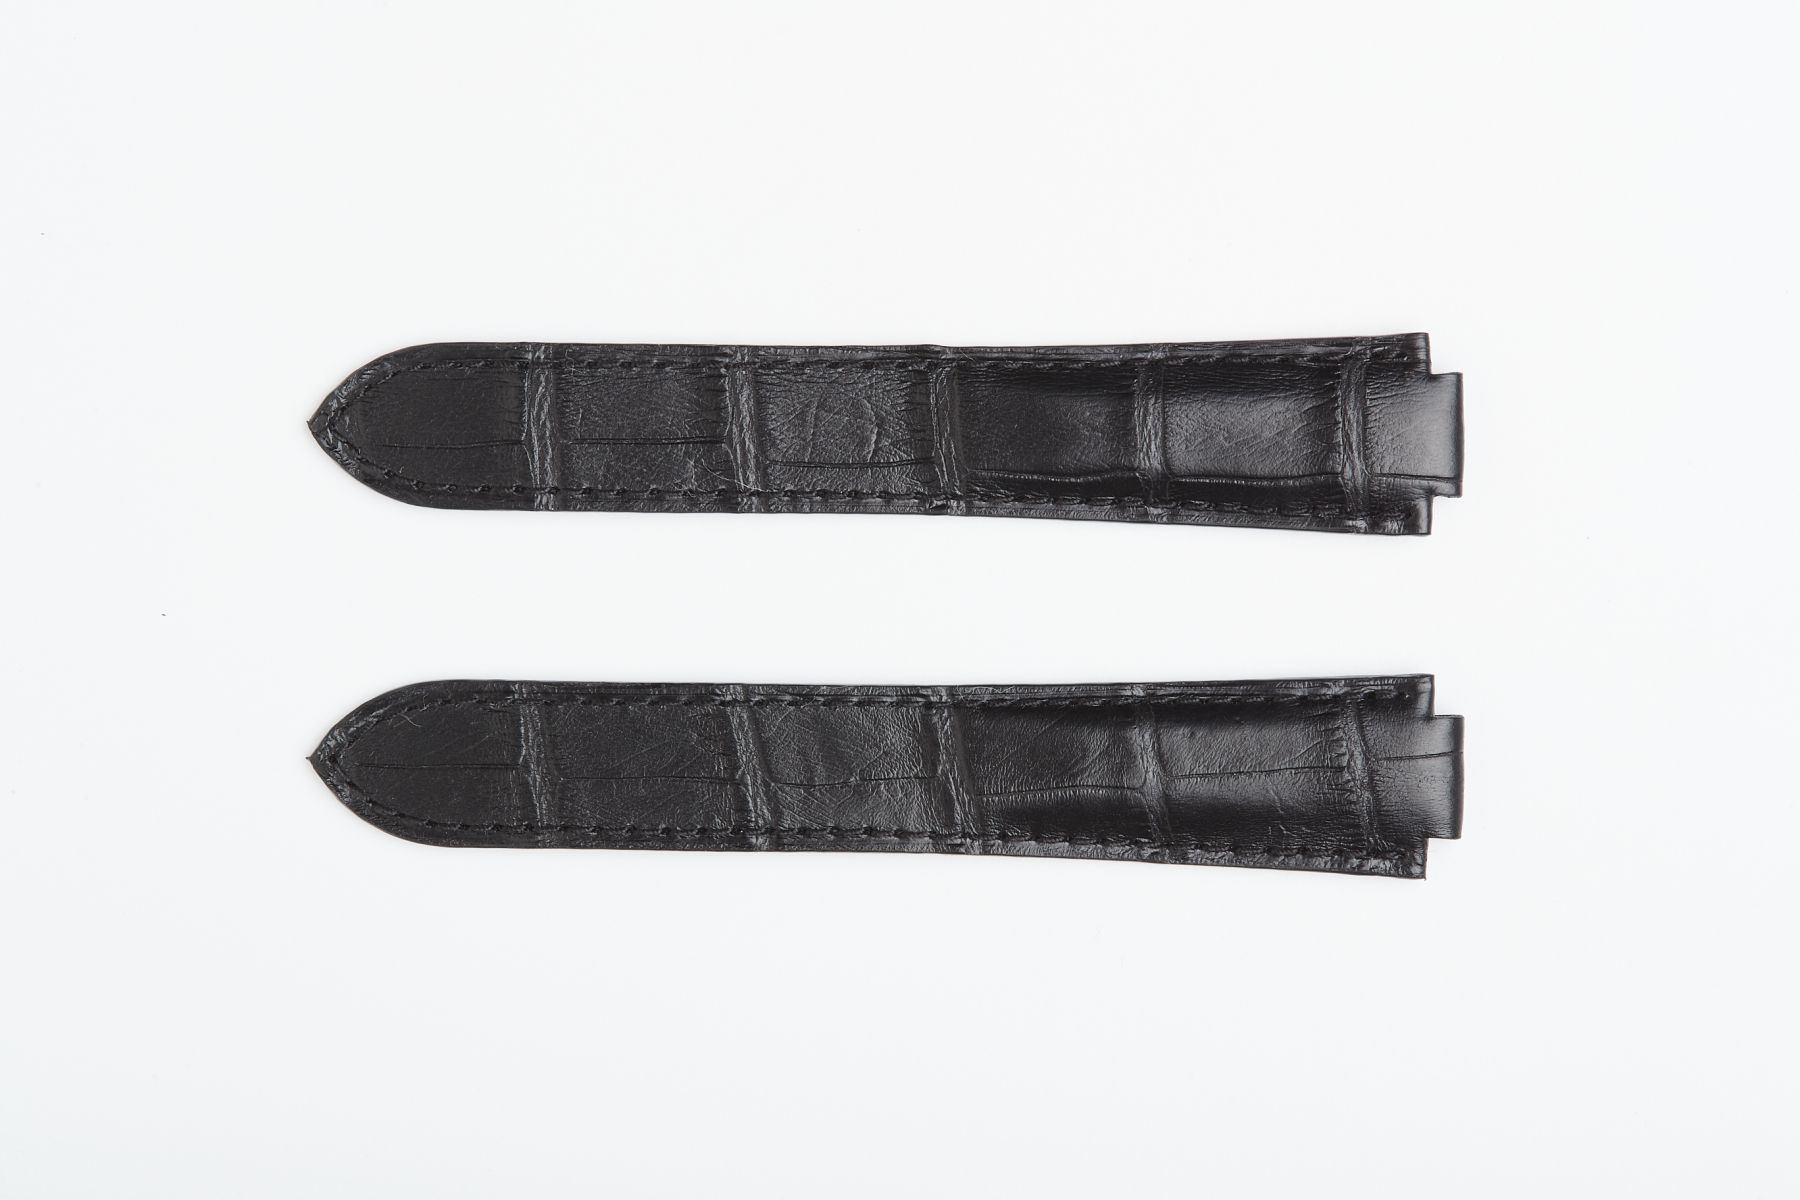 Black Matte Alligator leather strap 20mm for Ballon Bleu by Cartier style timepieces